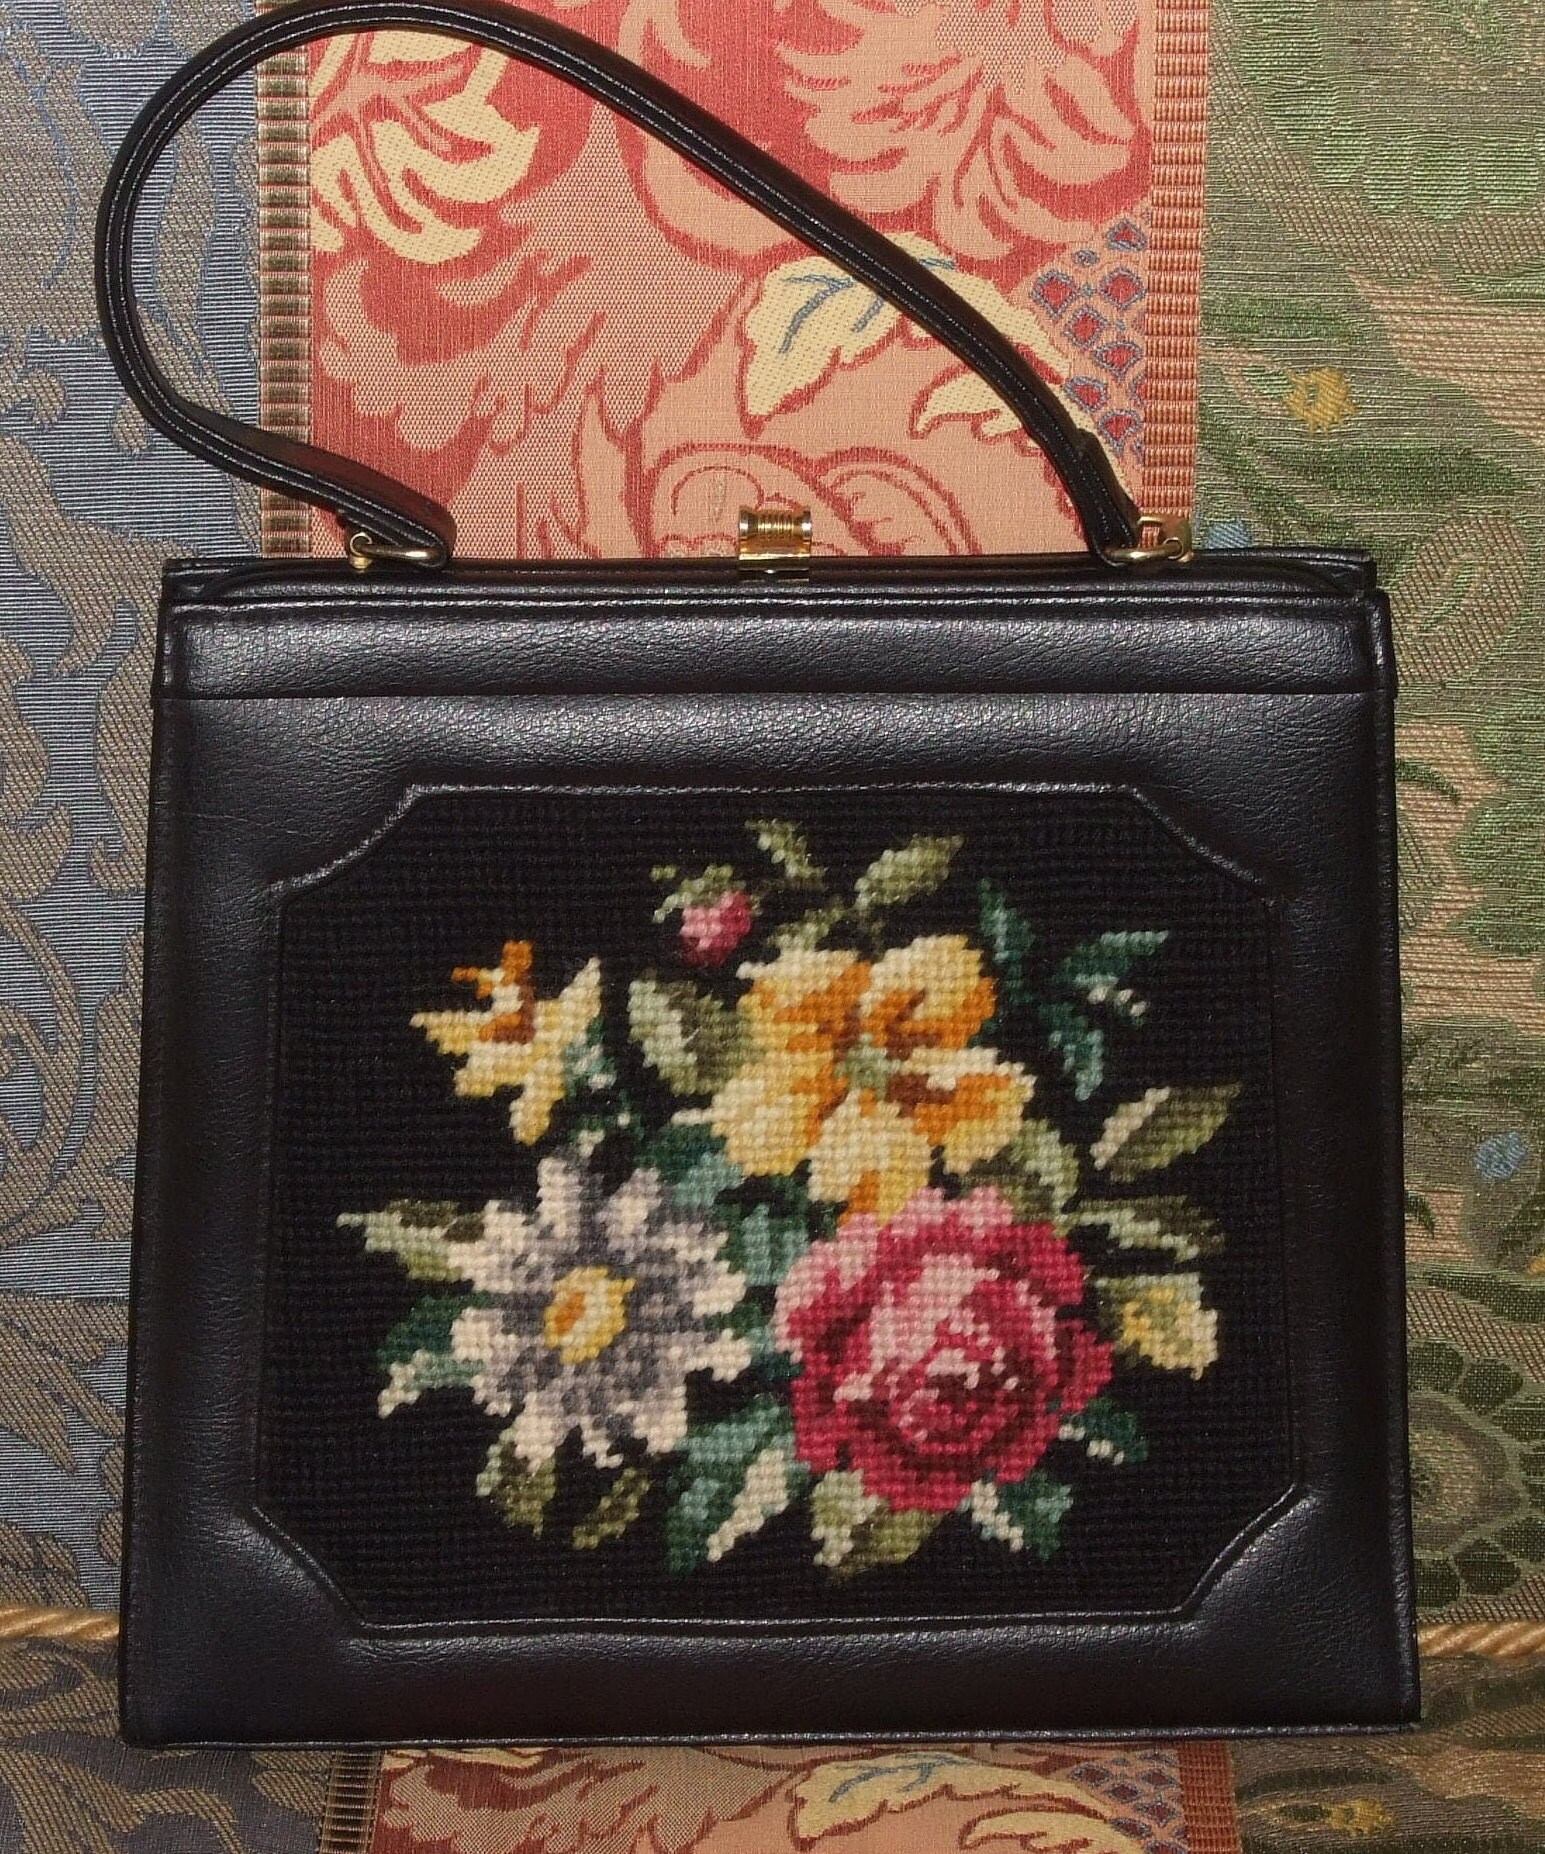 Needlepoint Small Clutch Bag & Wood Handmade Bag